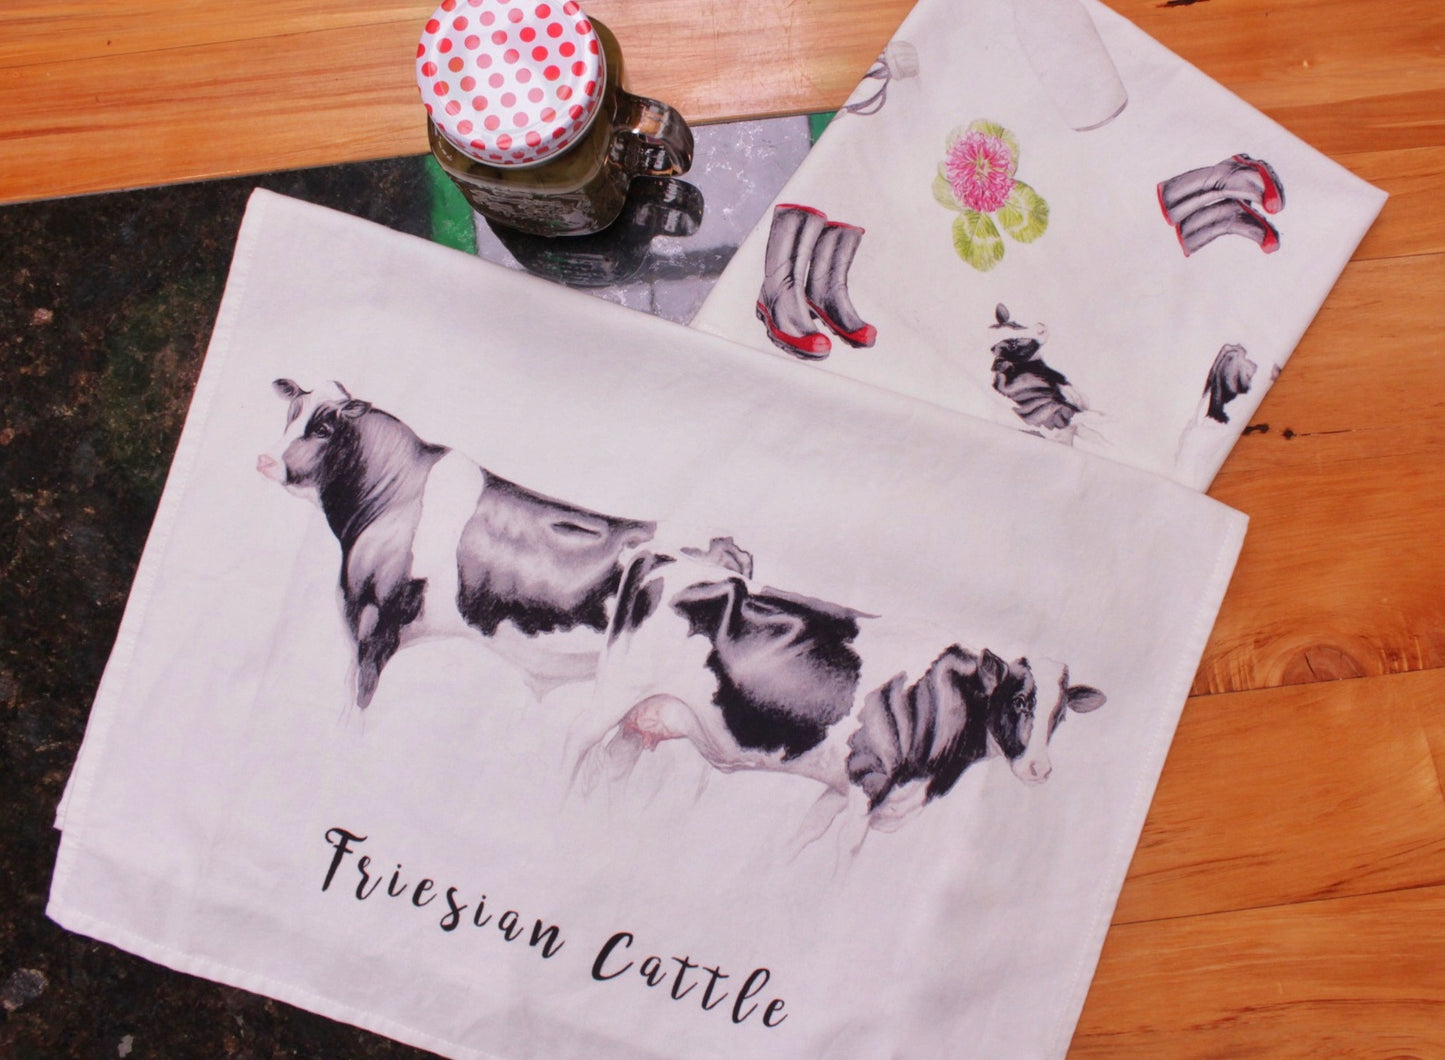 Friesian Cattle Fine Art NZ Tea Towel